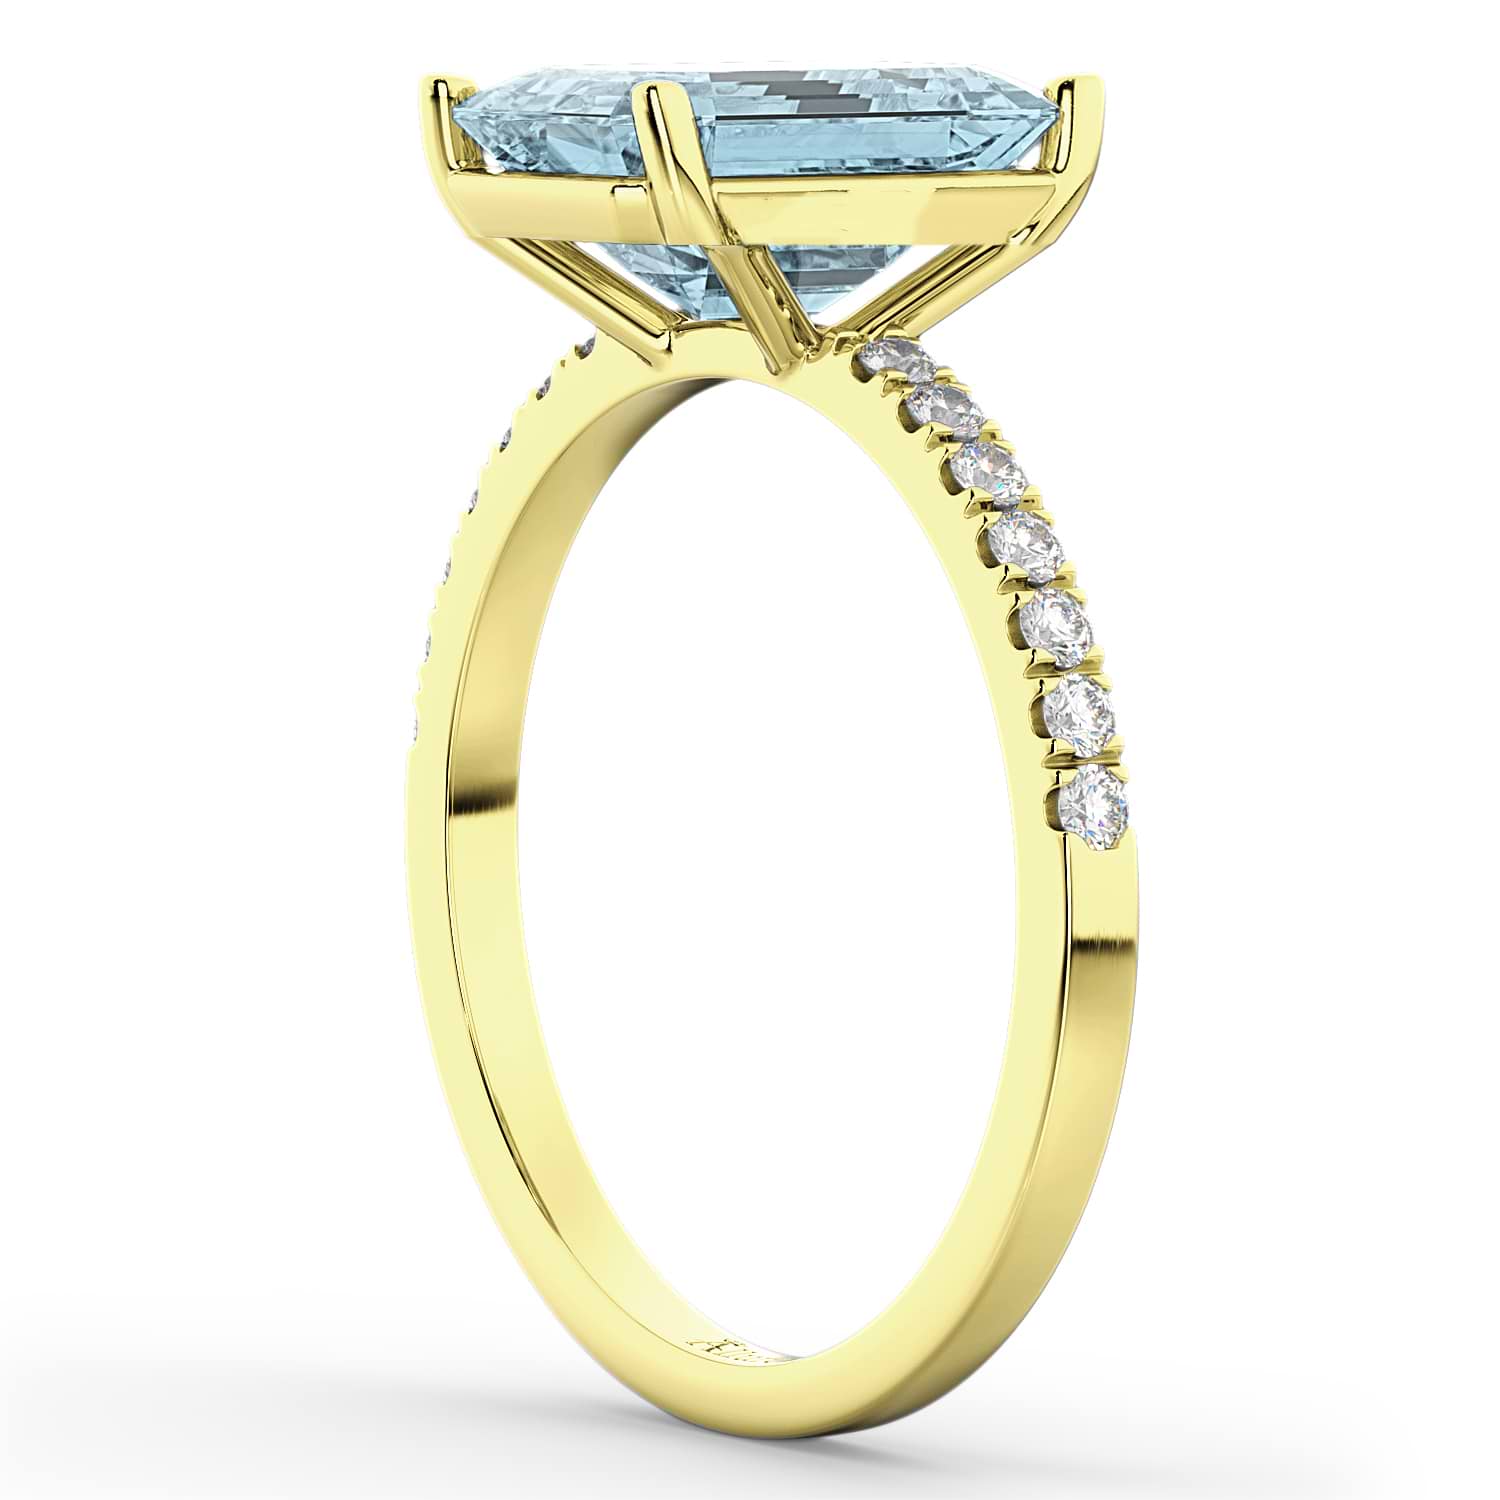 Emerald Cut Aquamarine & Diamond Engagement Ring 18k Yellow Gold (2.96ct)